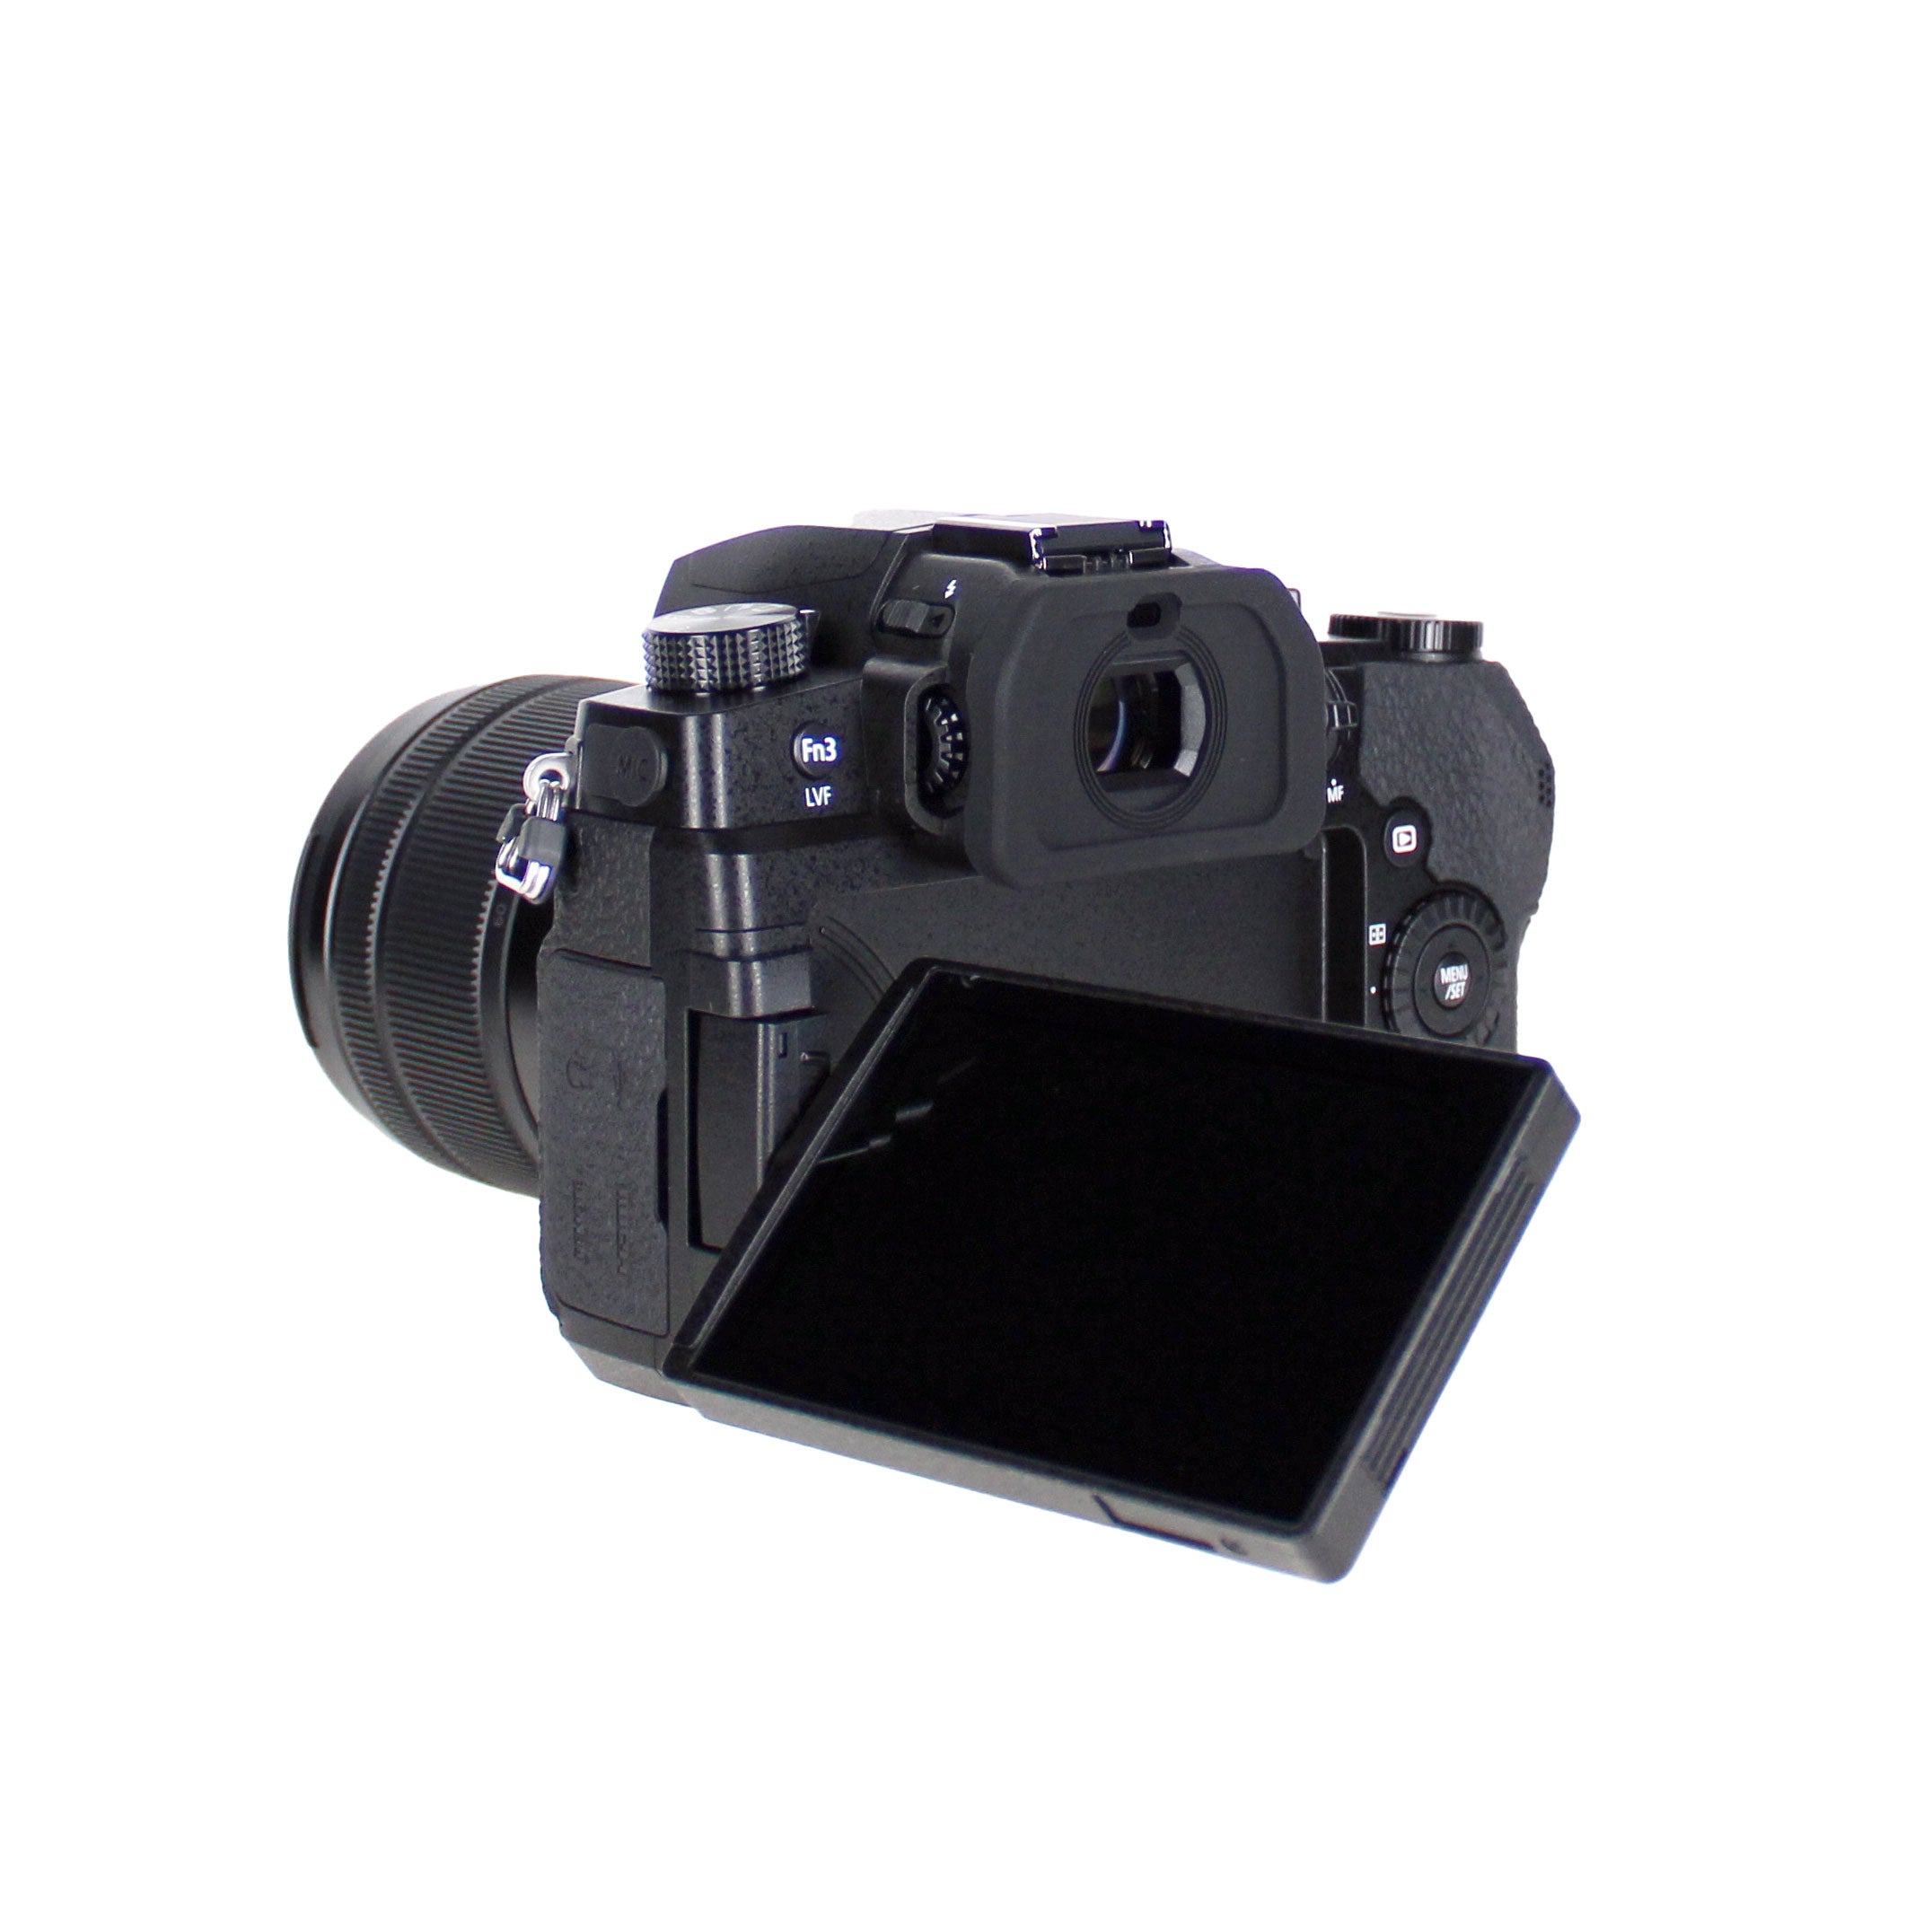 Panasonic LUMIX G95D 20.3 Megapixel Mirrorless Camera, 12-60mm F3.5-5.6 Micro Four Thirds Lens, 5-Axis Dual I.S. 2, 4K 24p 30p Video, Pre-Installed V-Log L, 3” OLED Touchscreen - DC-G95DMK(Black)